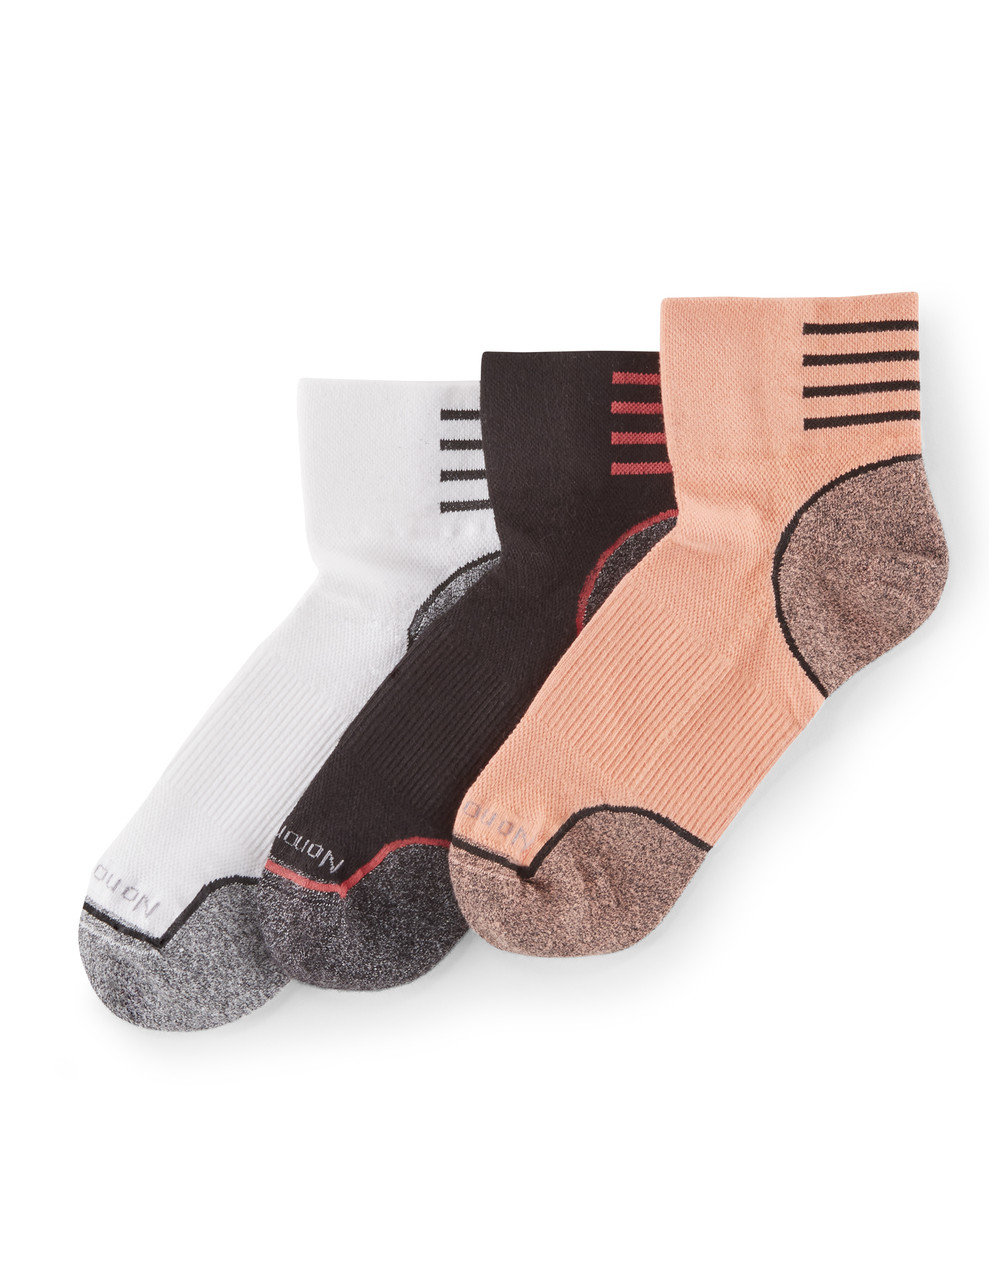 No Nonsense Women's Moisturizing Aloe Socks, Assorted Styles, 3 Pack 